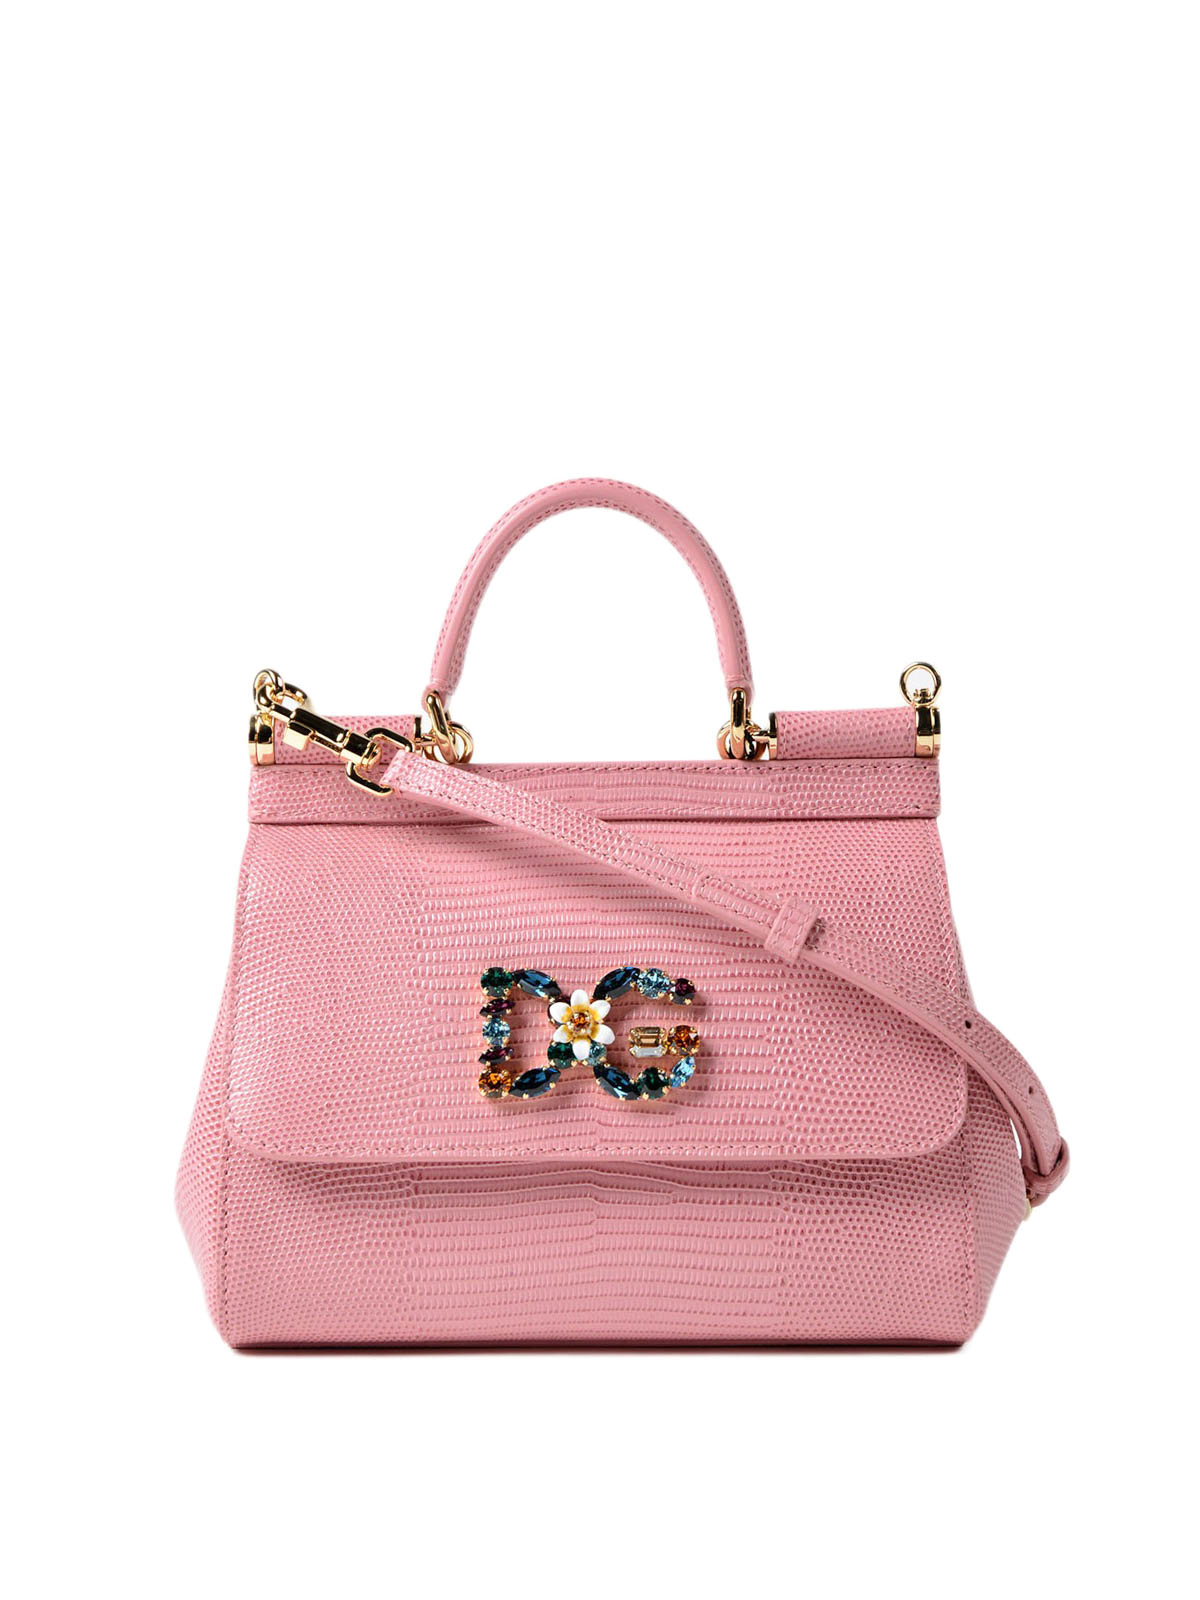 Cross body bags Dolce & Gabbana - Sicily iguana print pink small bag ...